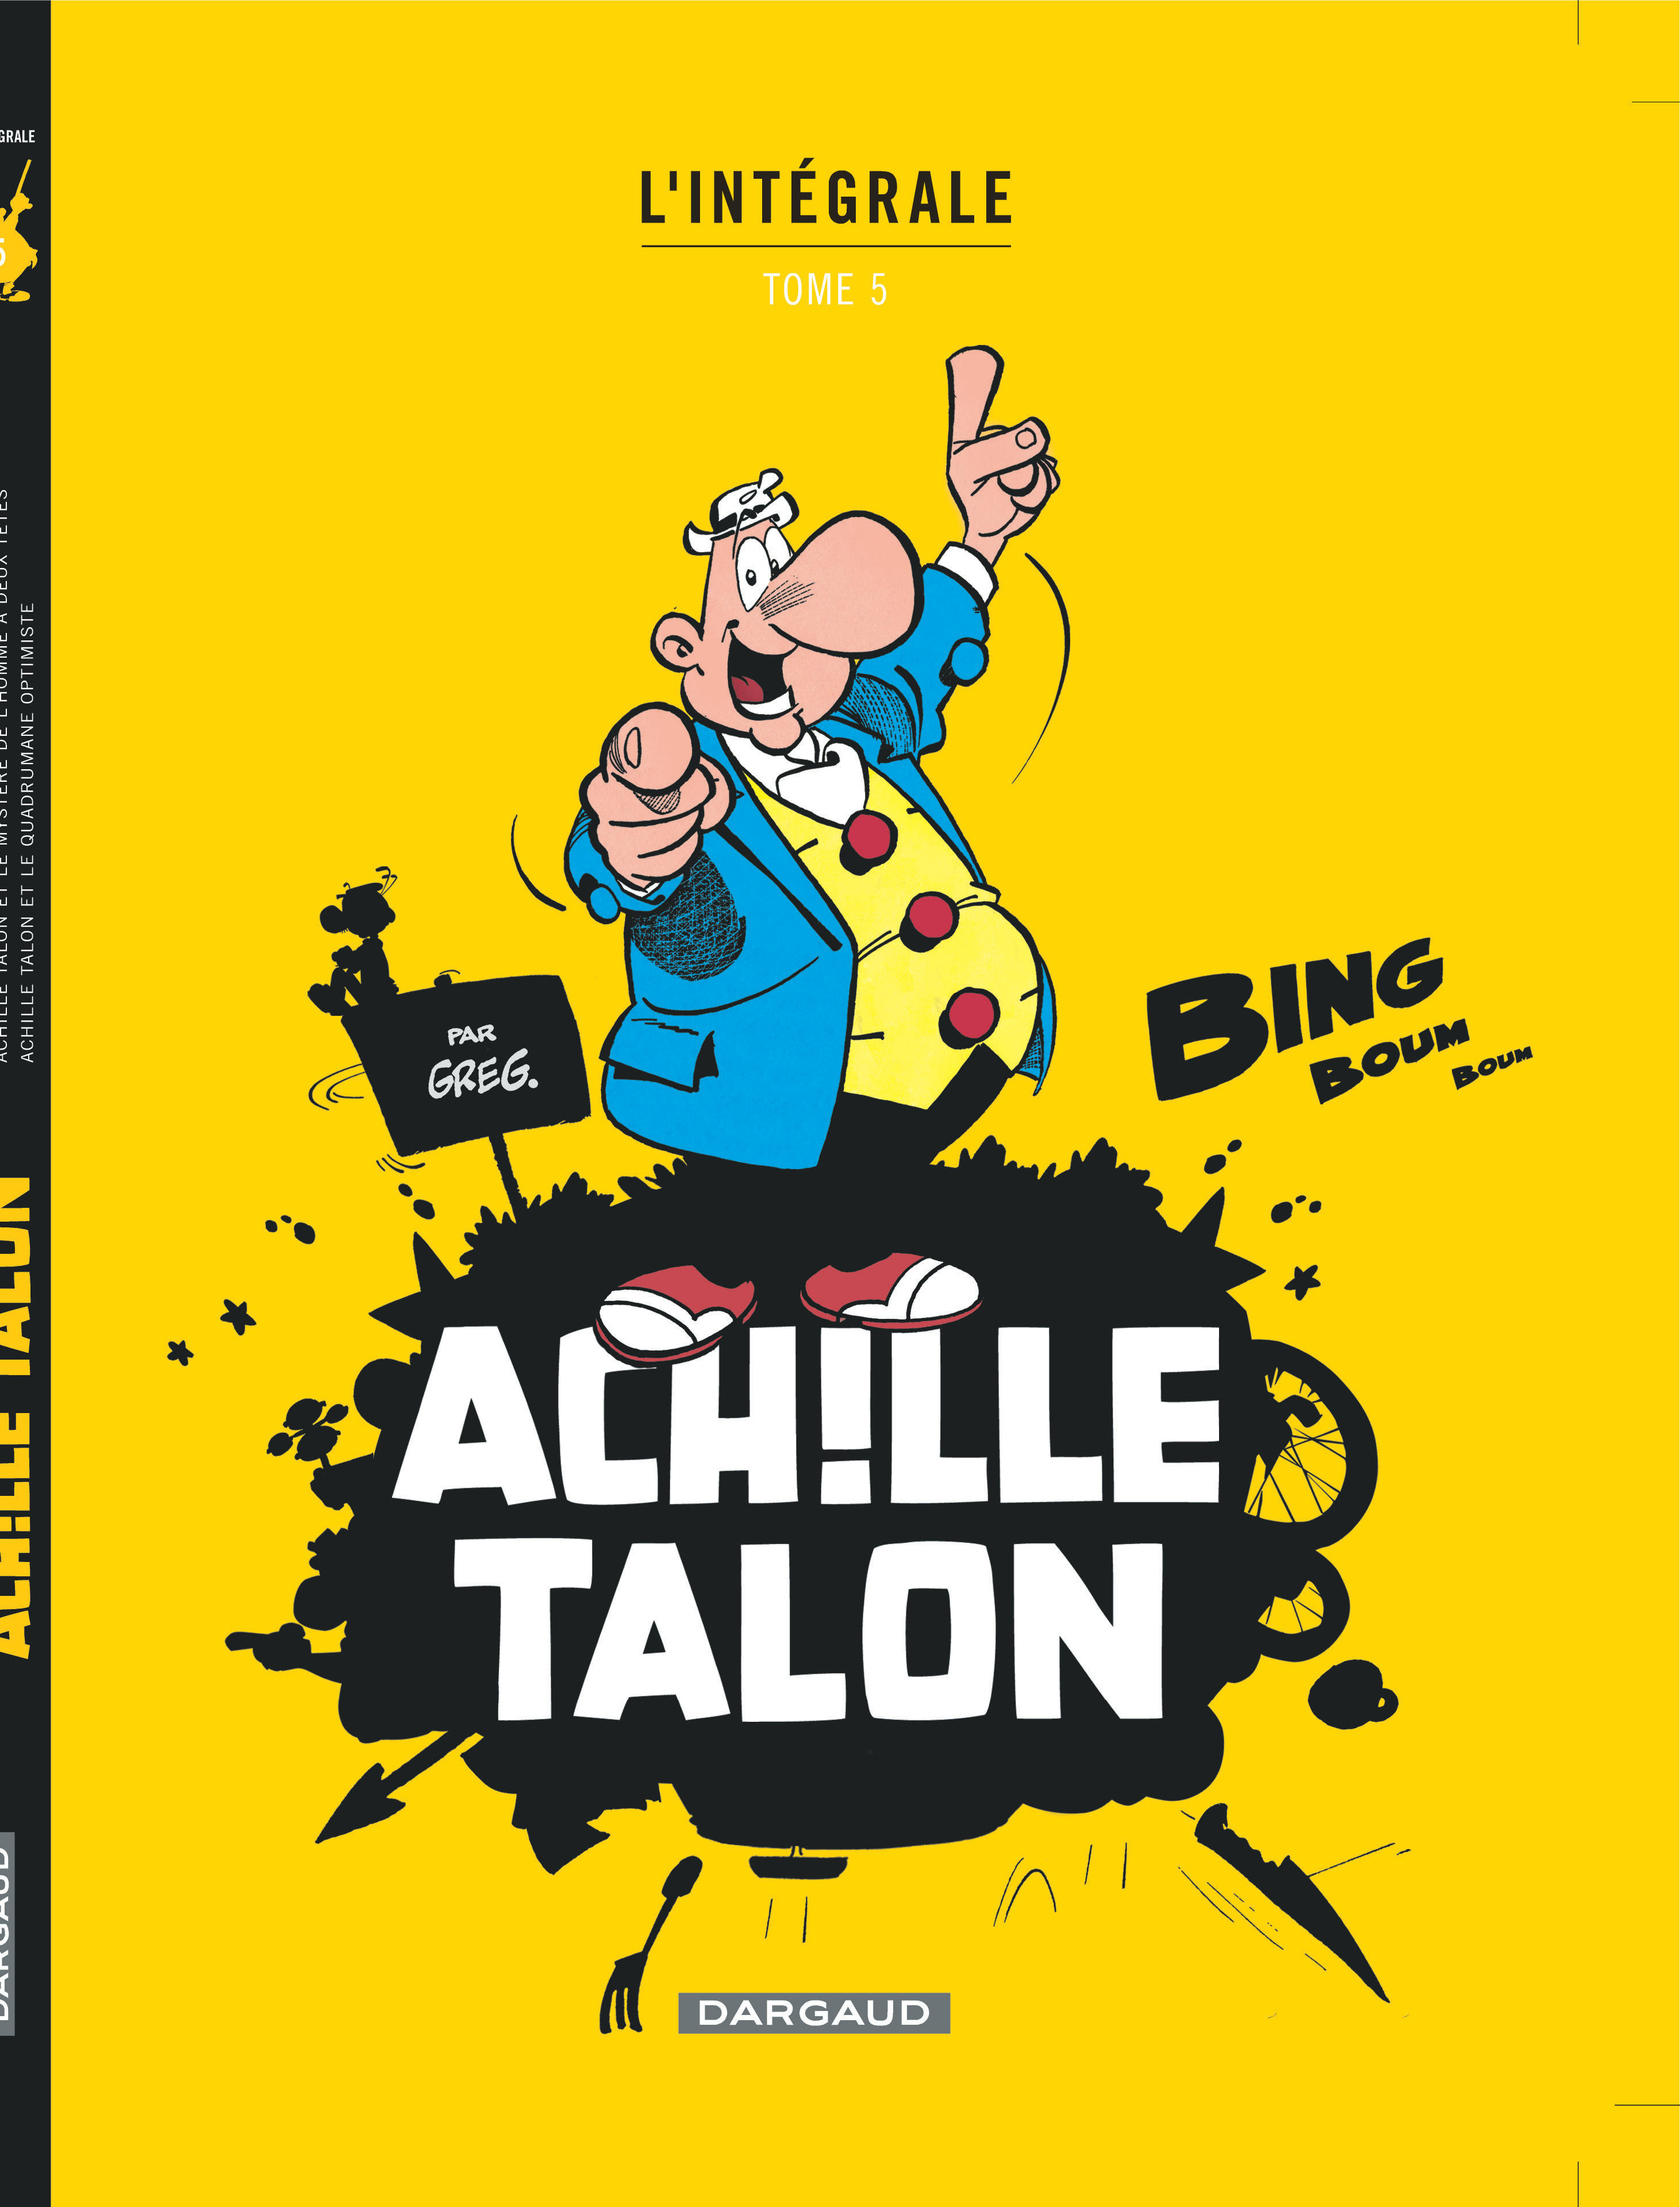 Achille Talon - Intégrales – Tome 5 – Mon Oeuvre à moi - tome 5 - couv